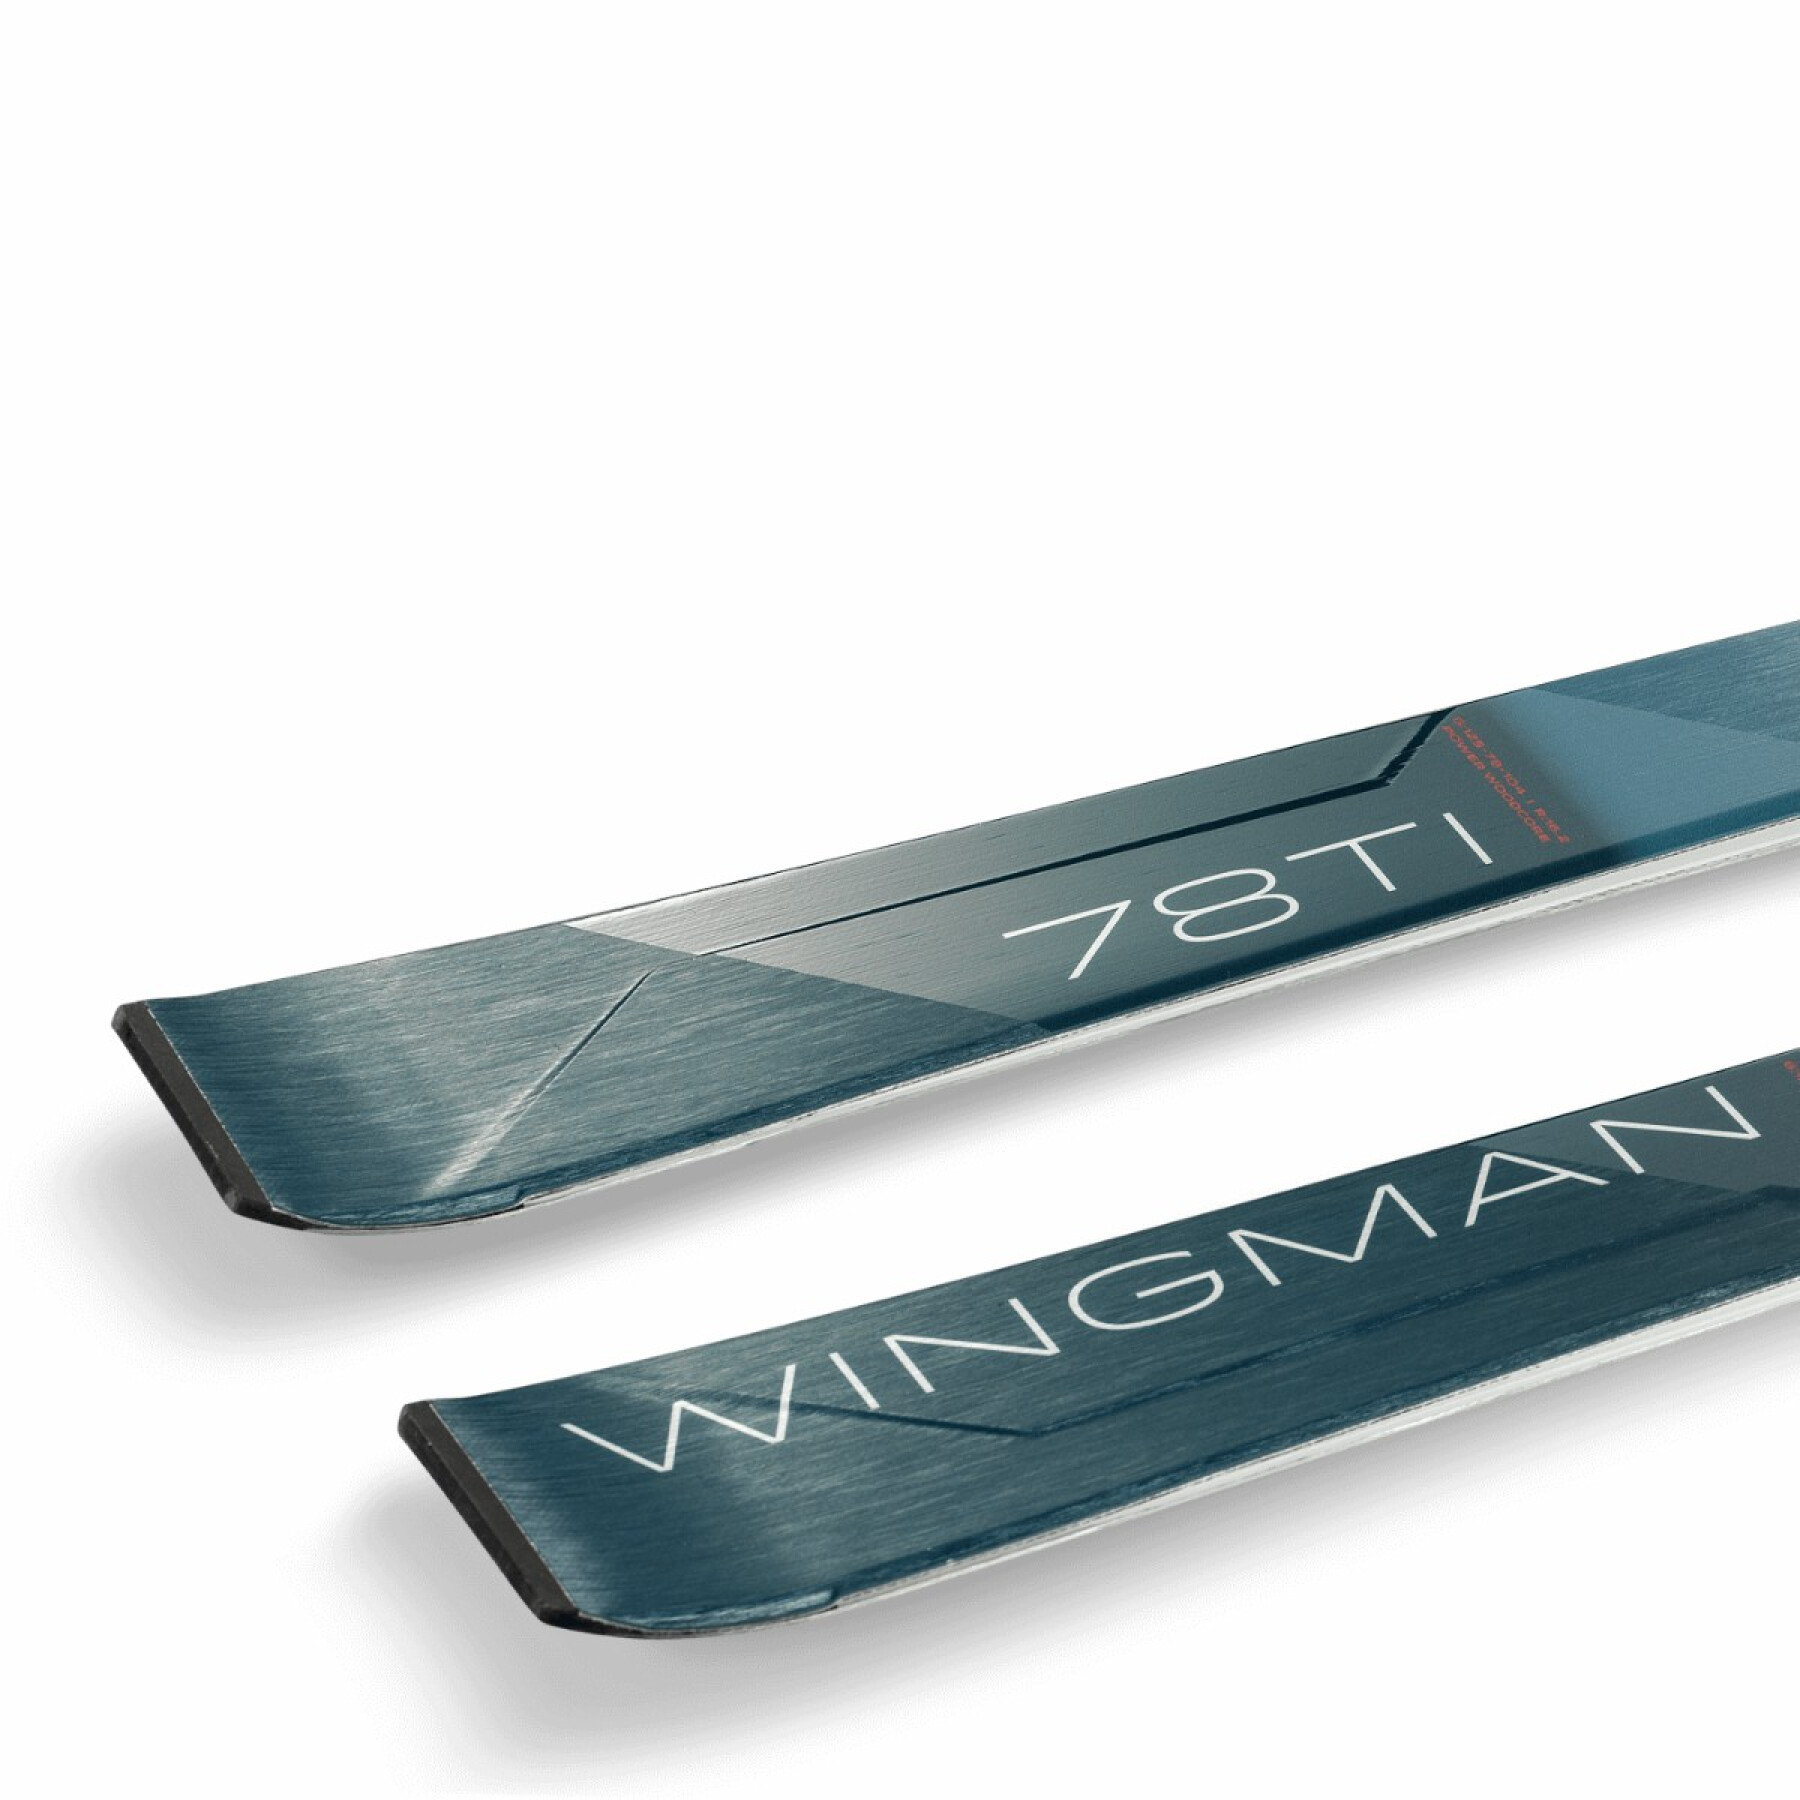 Pack skis Wingman 78 TI PS ELS 11.0 avec fixations Elan